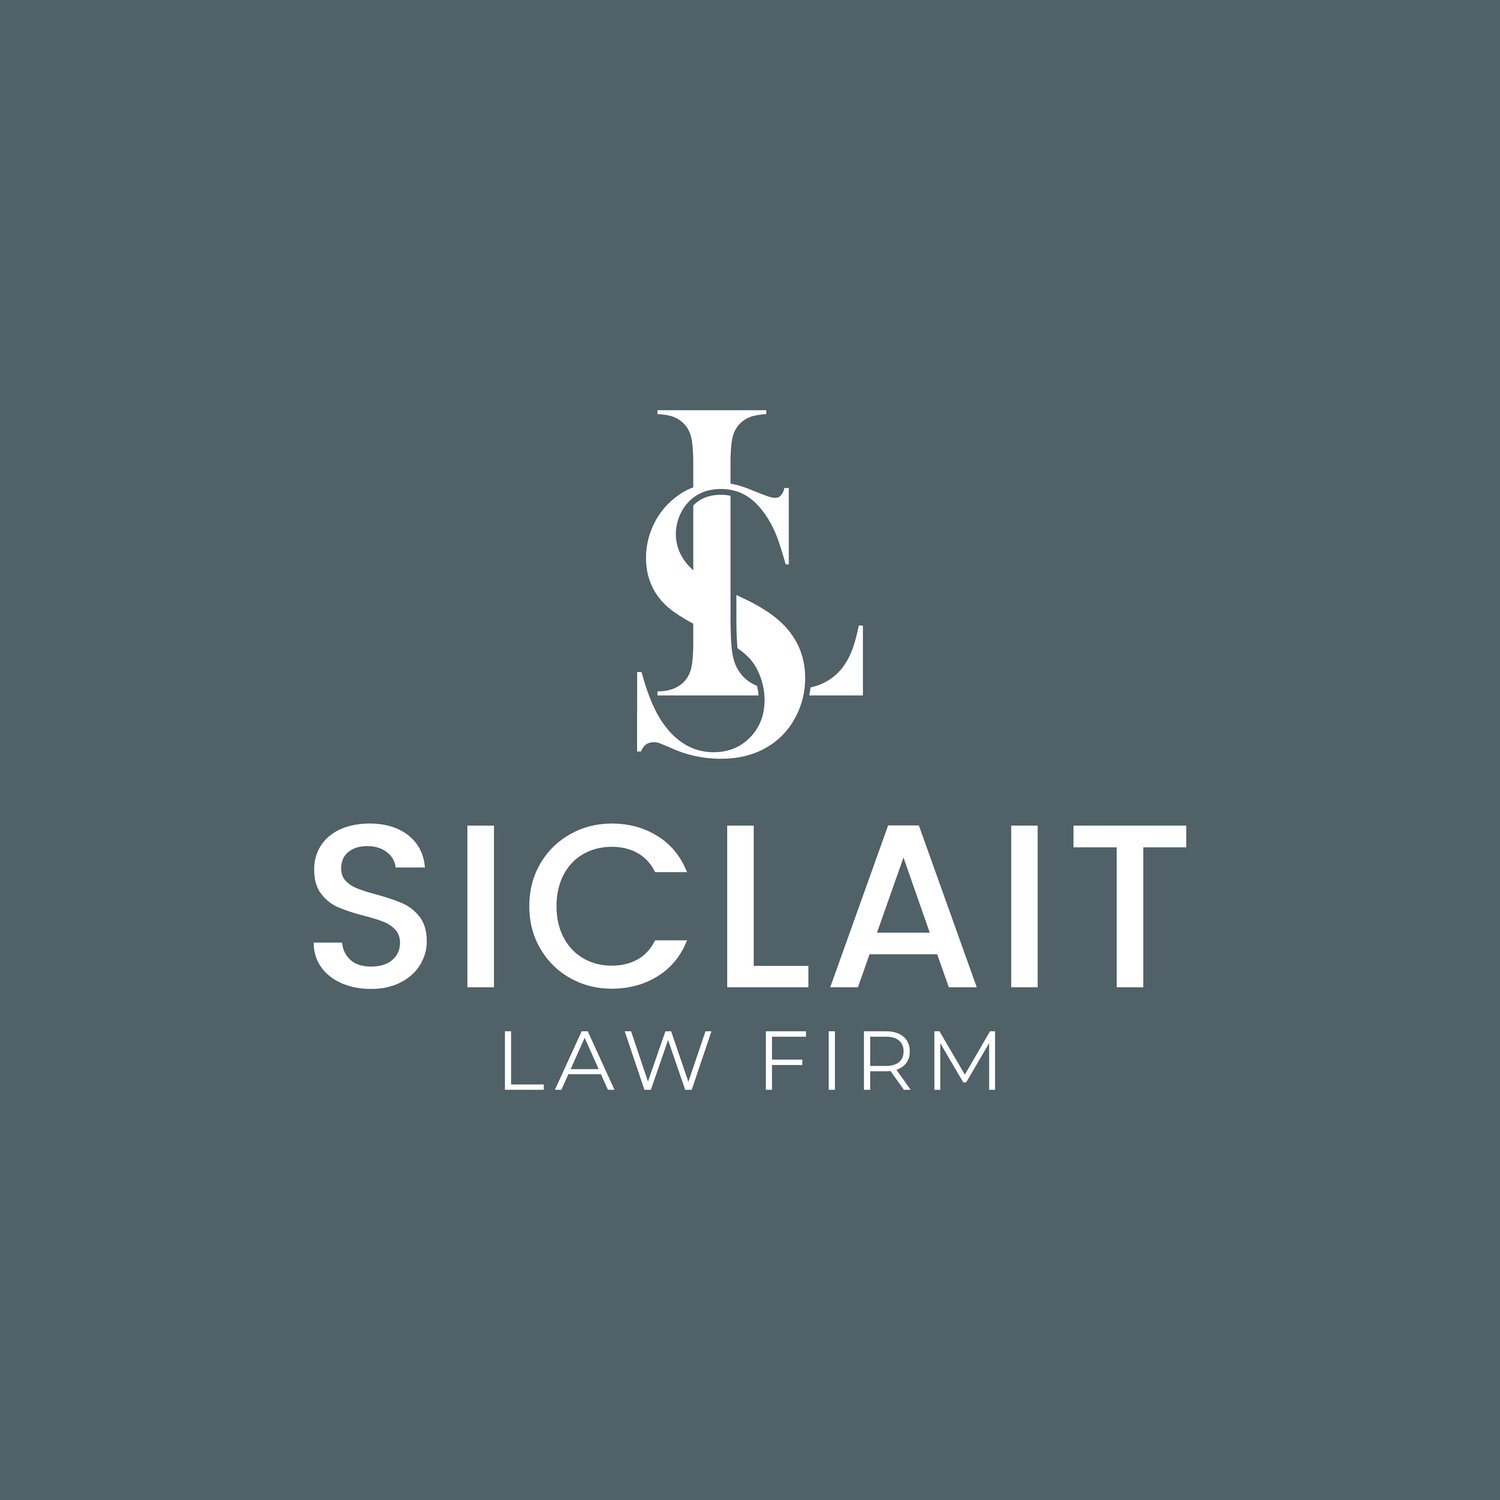 SICLAIT LAW FIRM